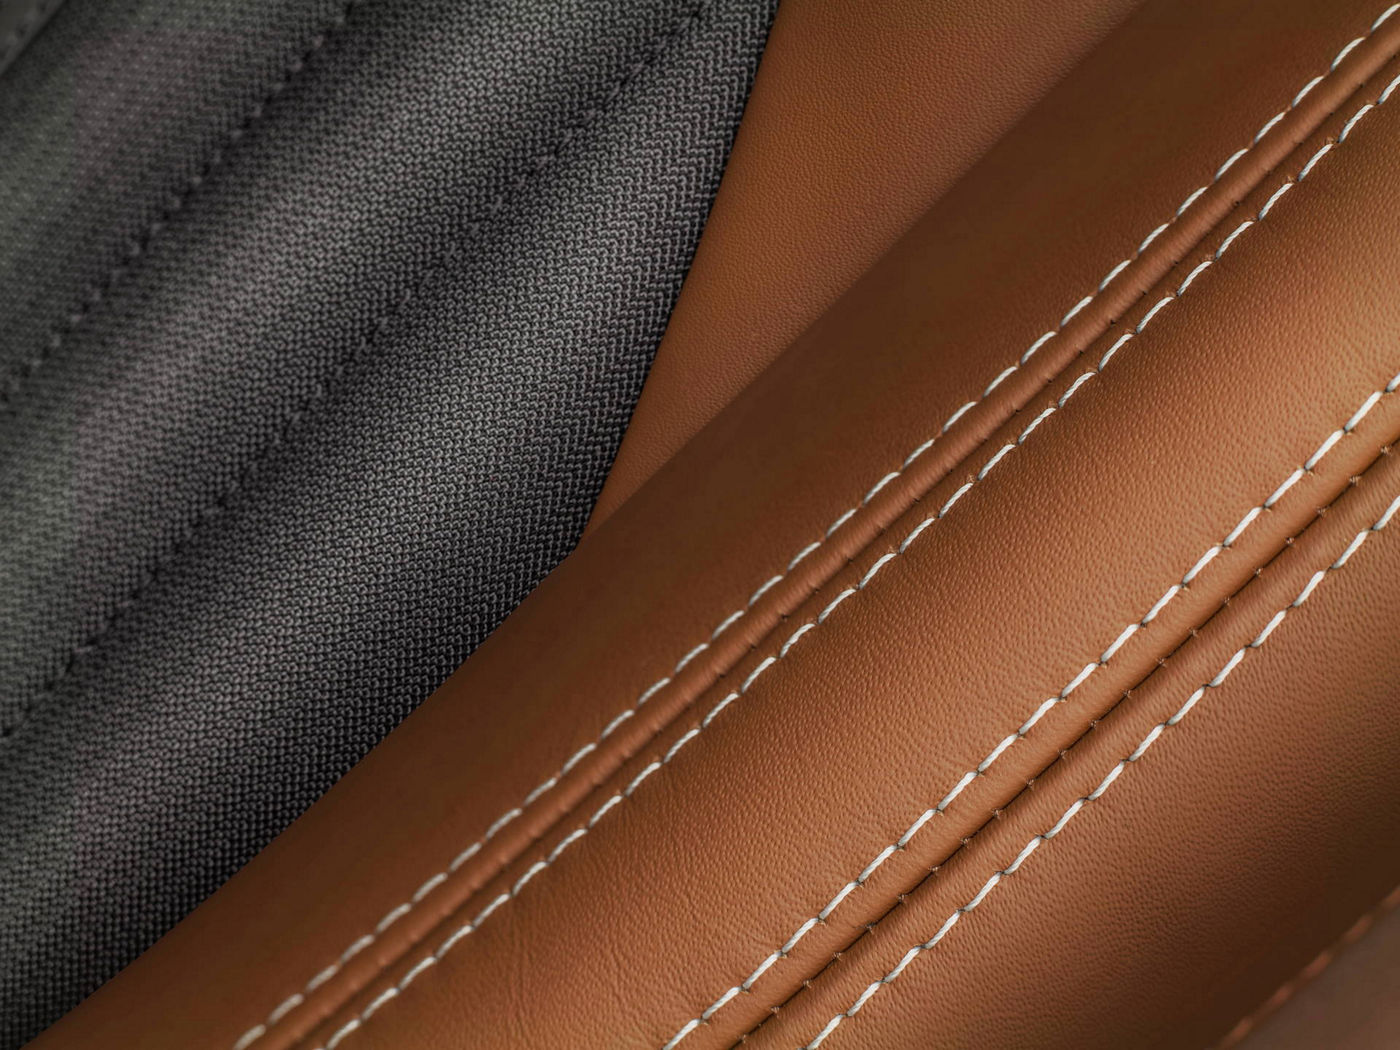 Maserati fabric, leather and stitching interior details by Ermenegildo Zegna